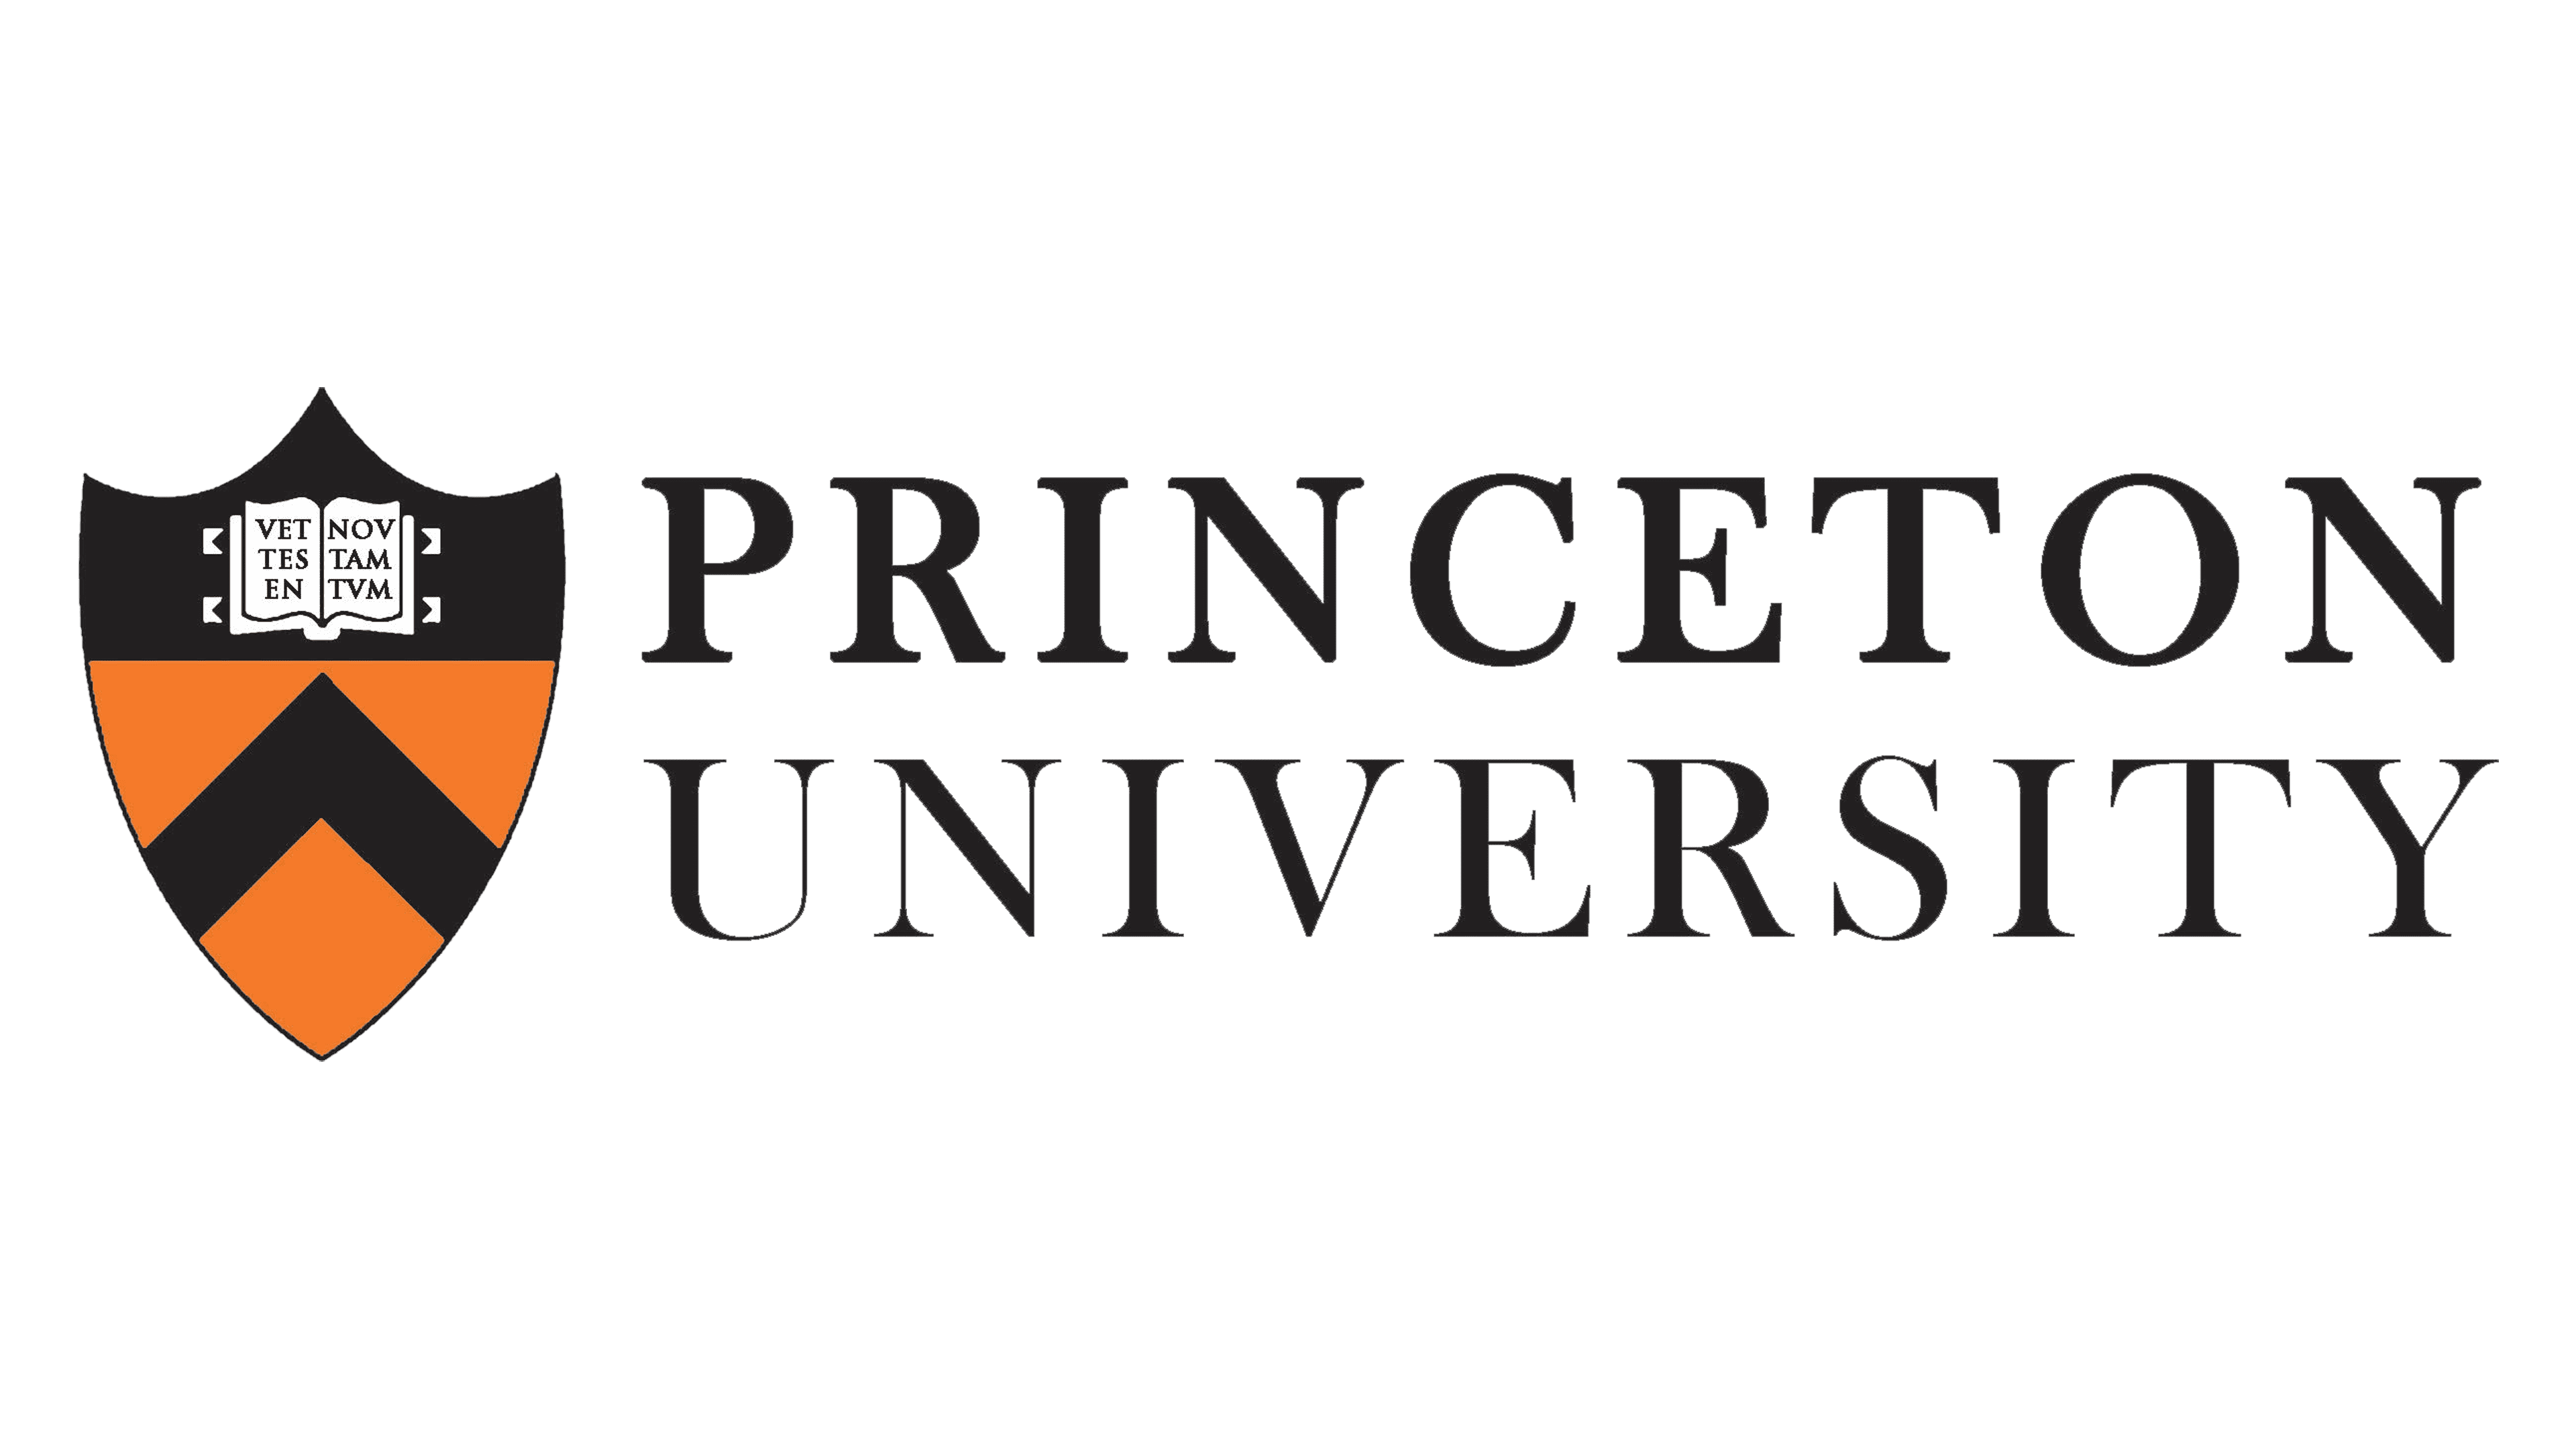 University-of-Princeton-Logo